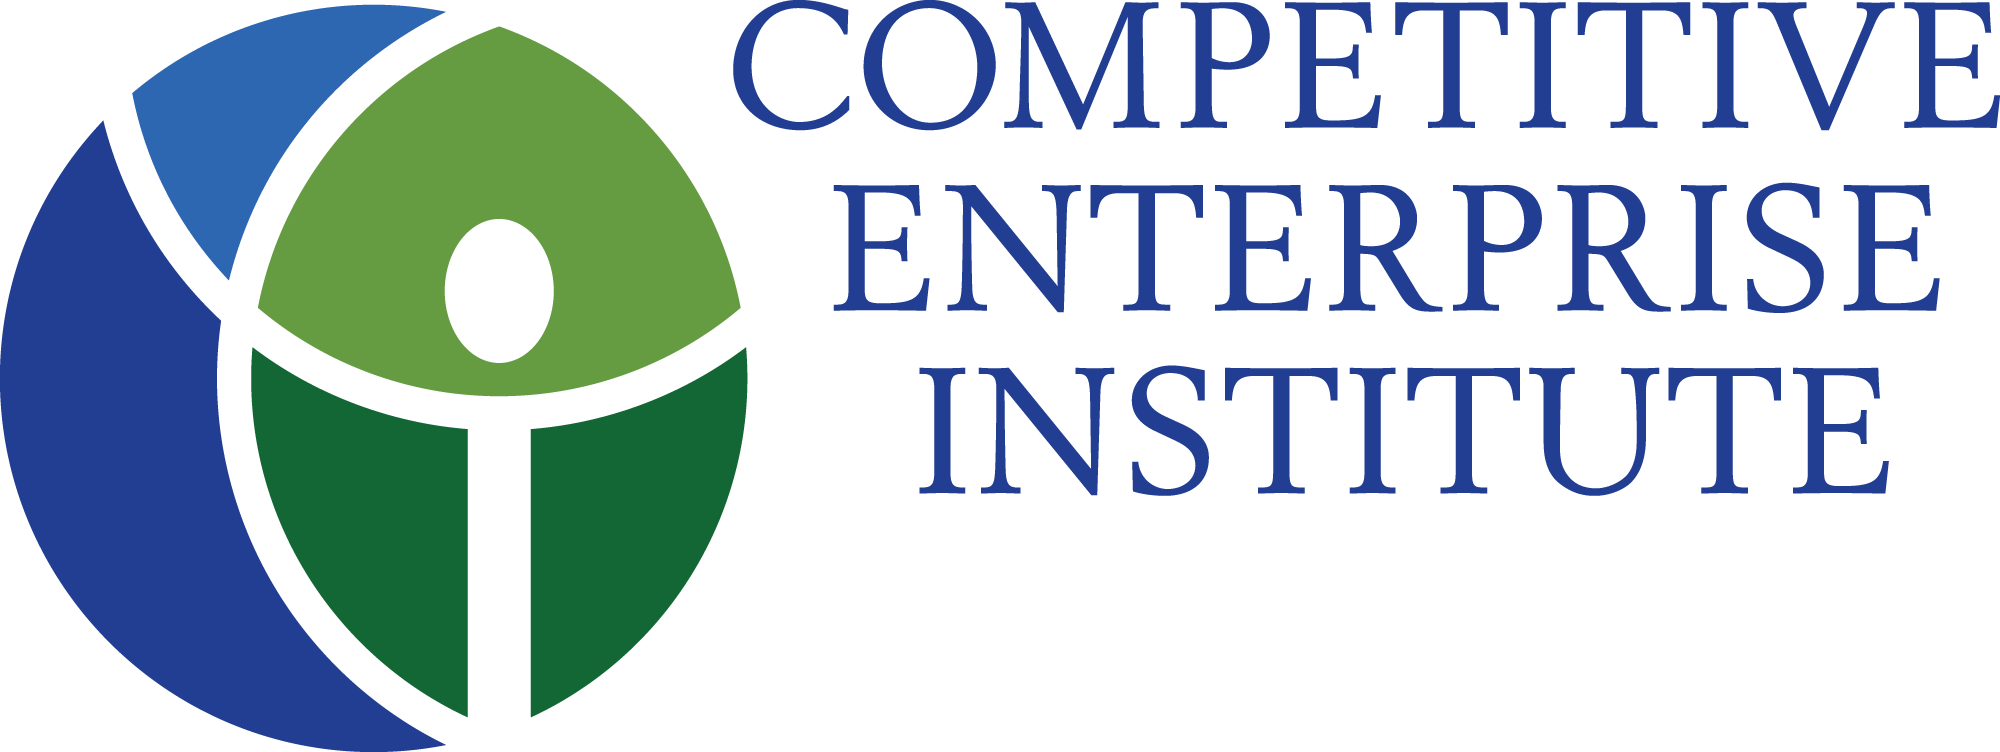 competitive enterprise institute logo